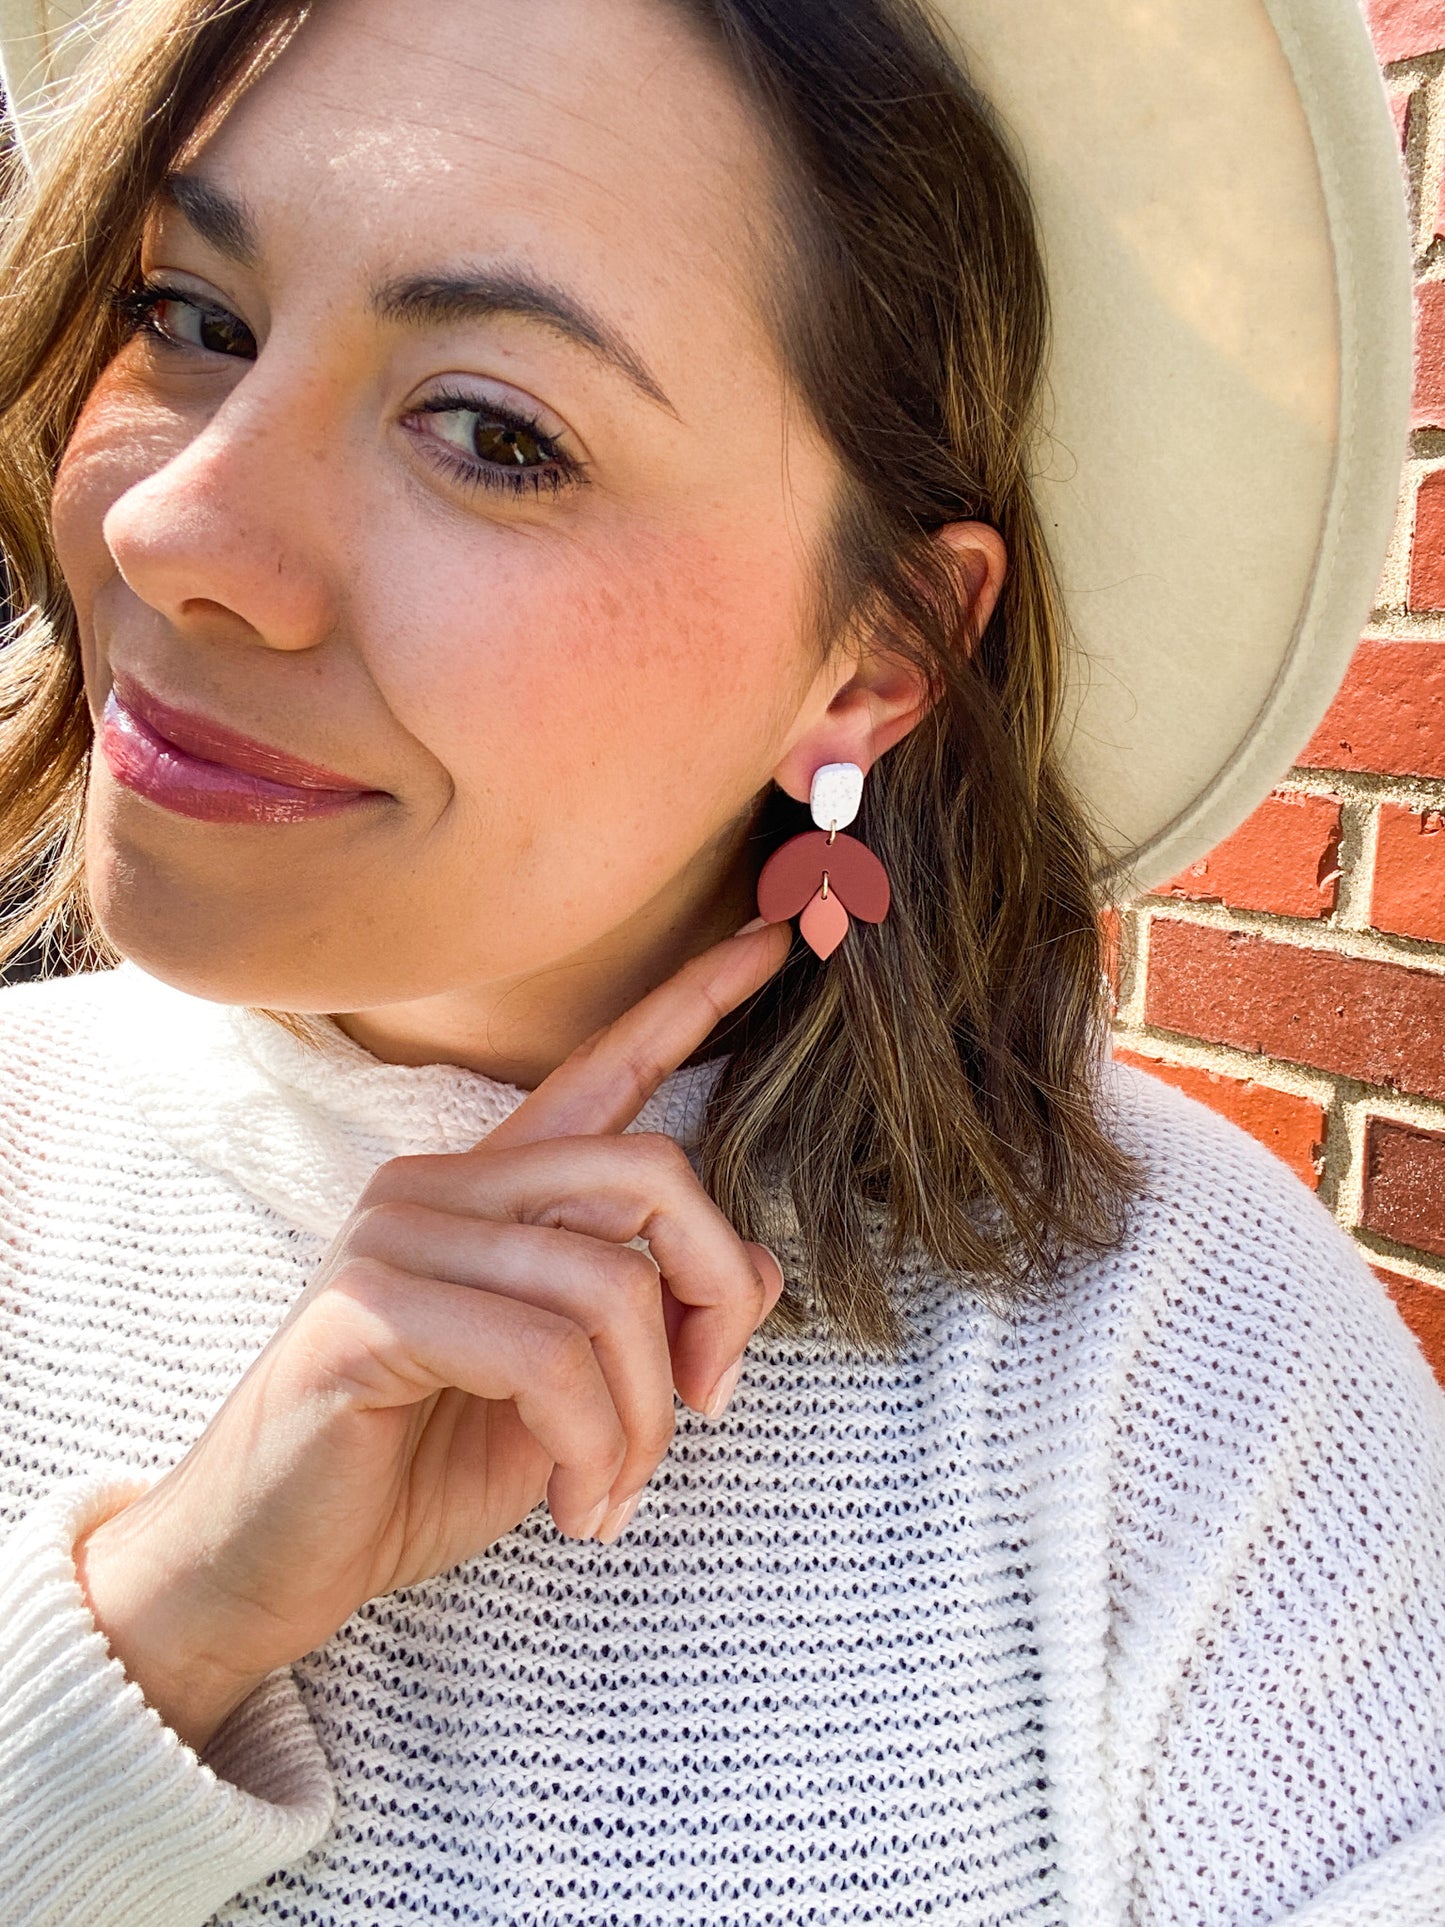 Dainty Pink & Gray Clay Dangles | Summer Earrings | Small Clay Earrings